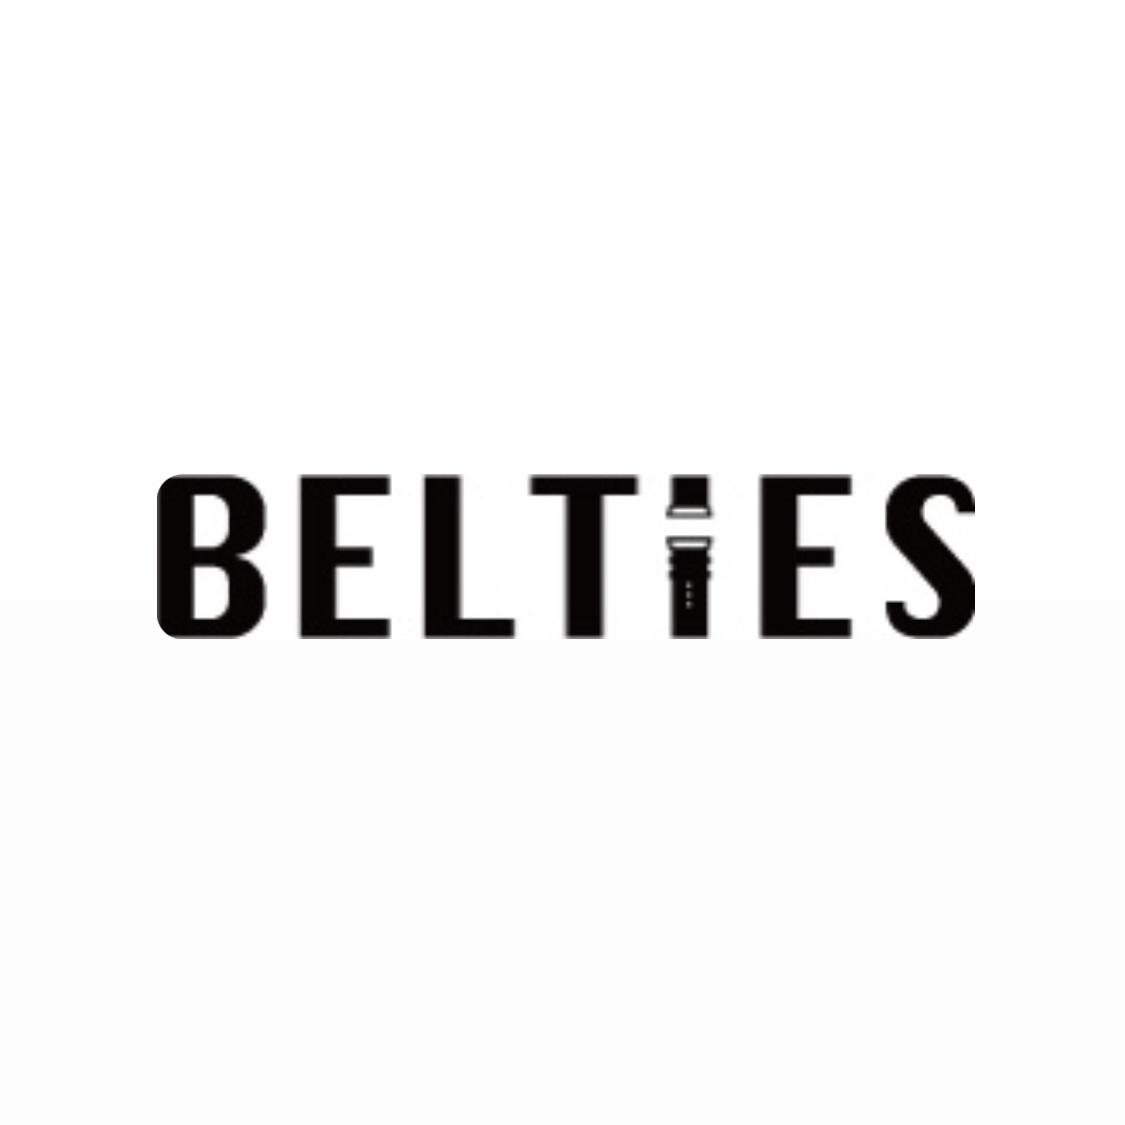 BELTIES(ベルティーズ)の画像